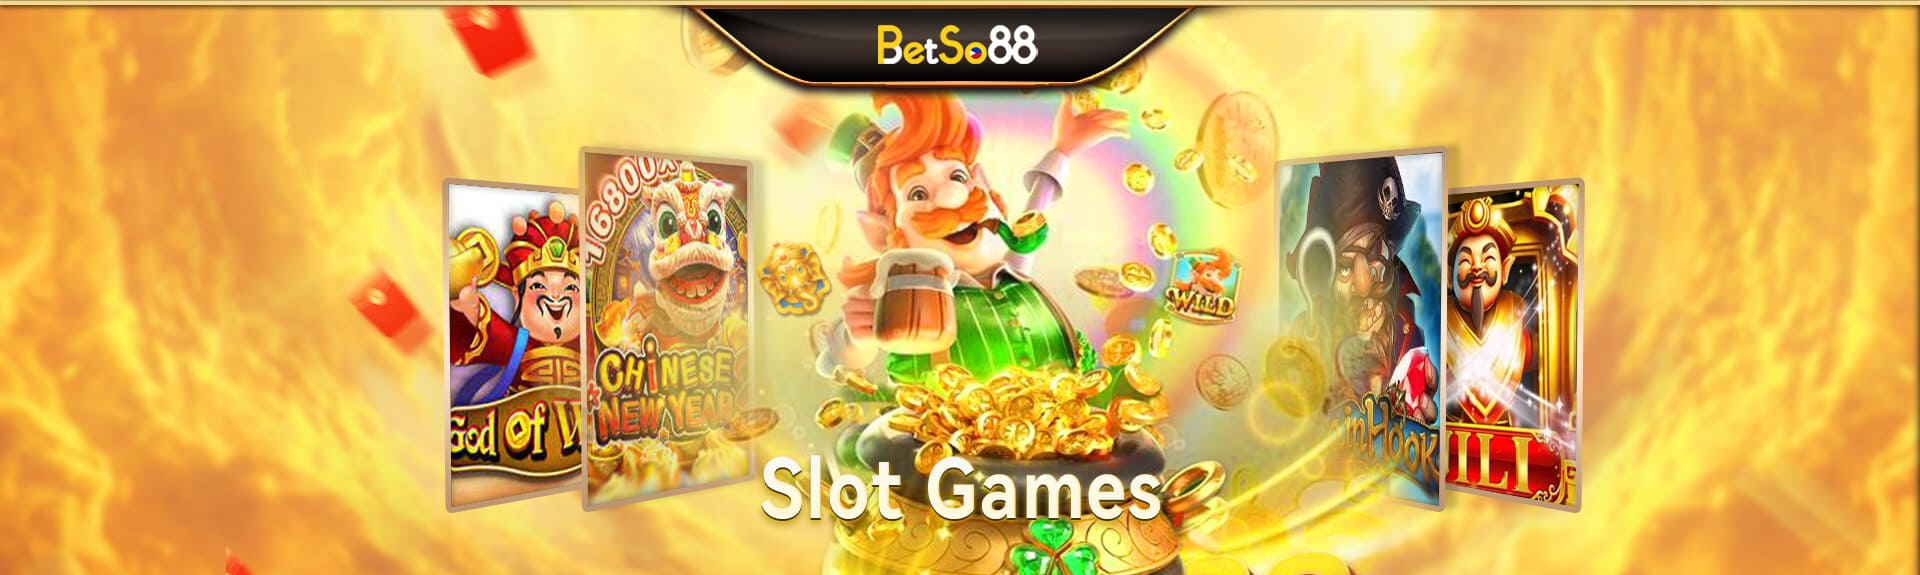 betso88 - slot games